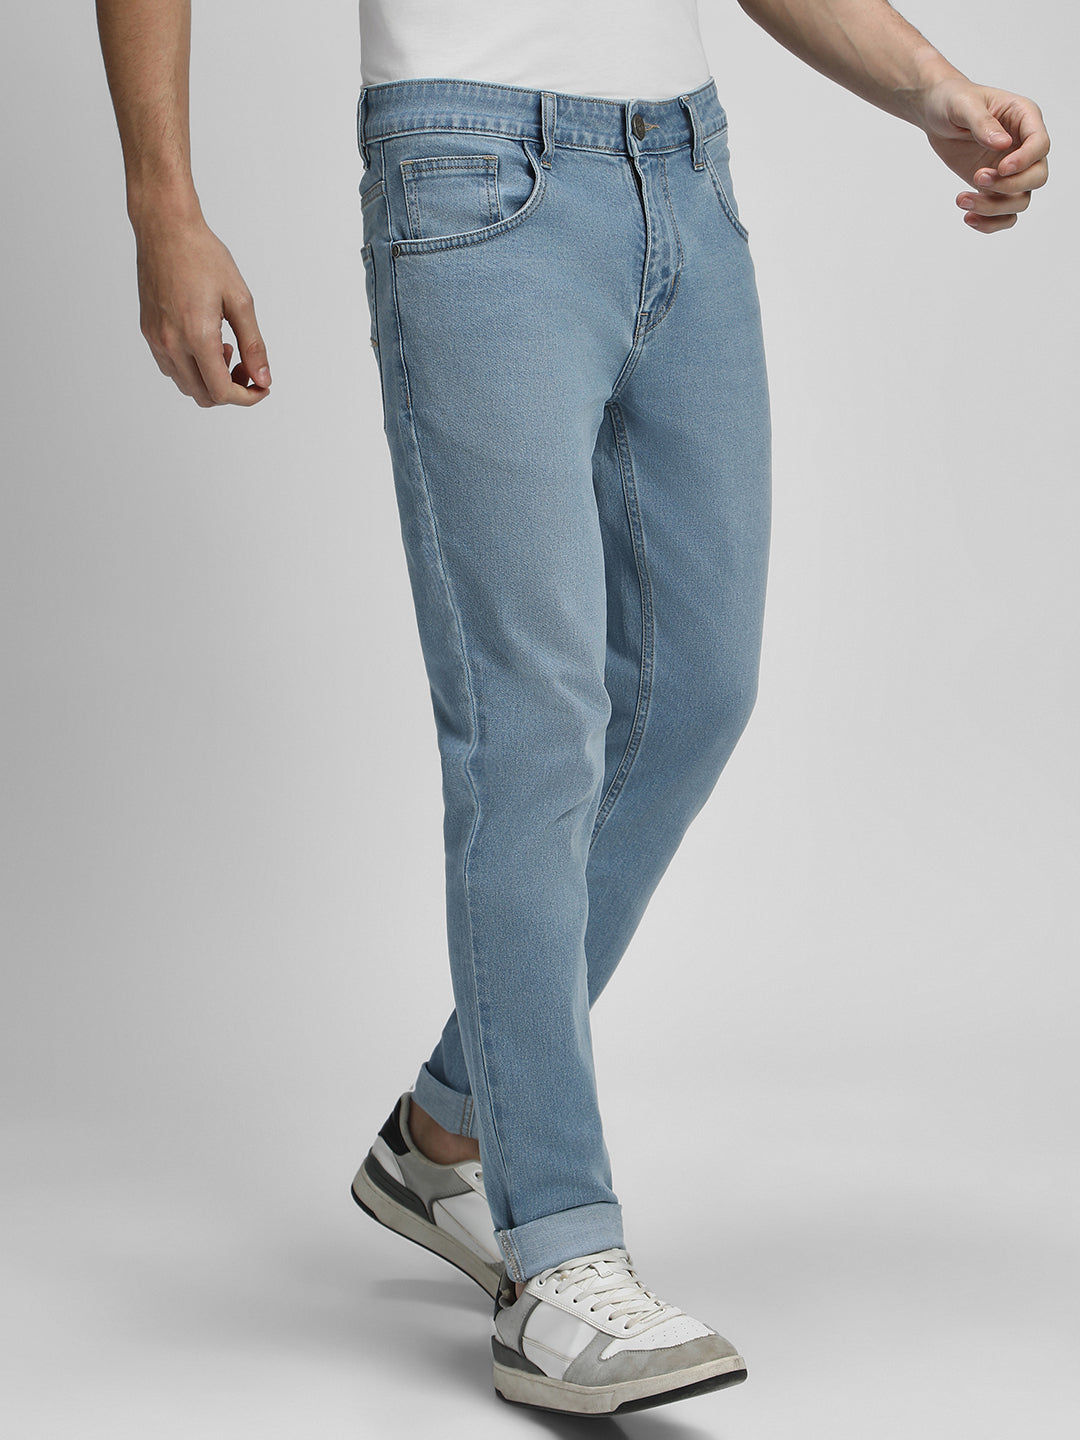 Dennis Lingo Men's Slim Fit Washed Indigo Stretchable Jeans – DENNIS LINGO